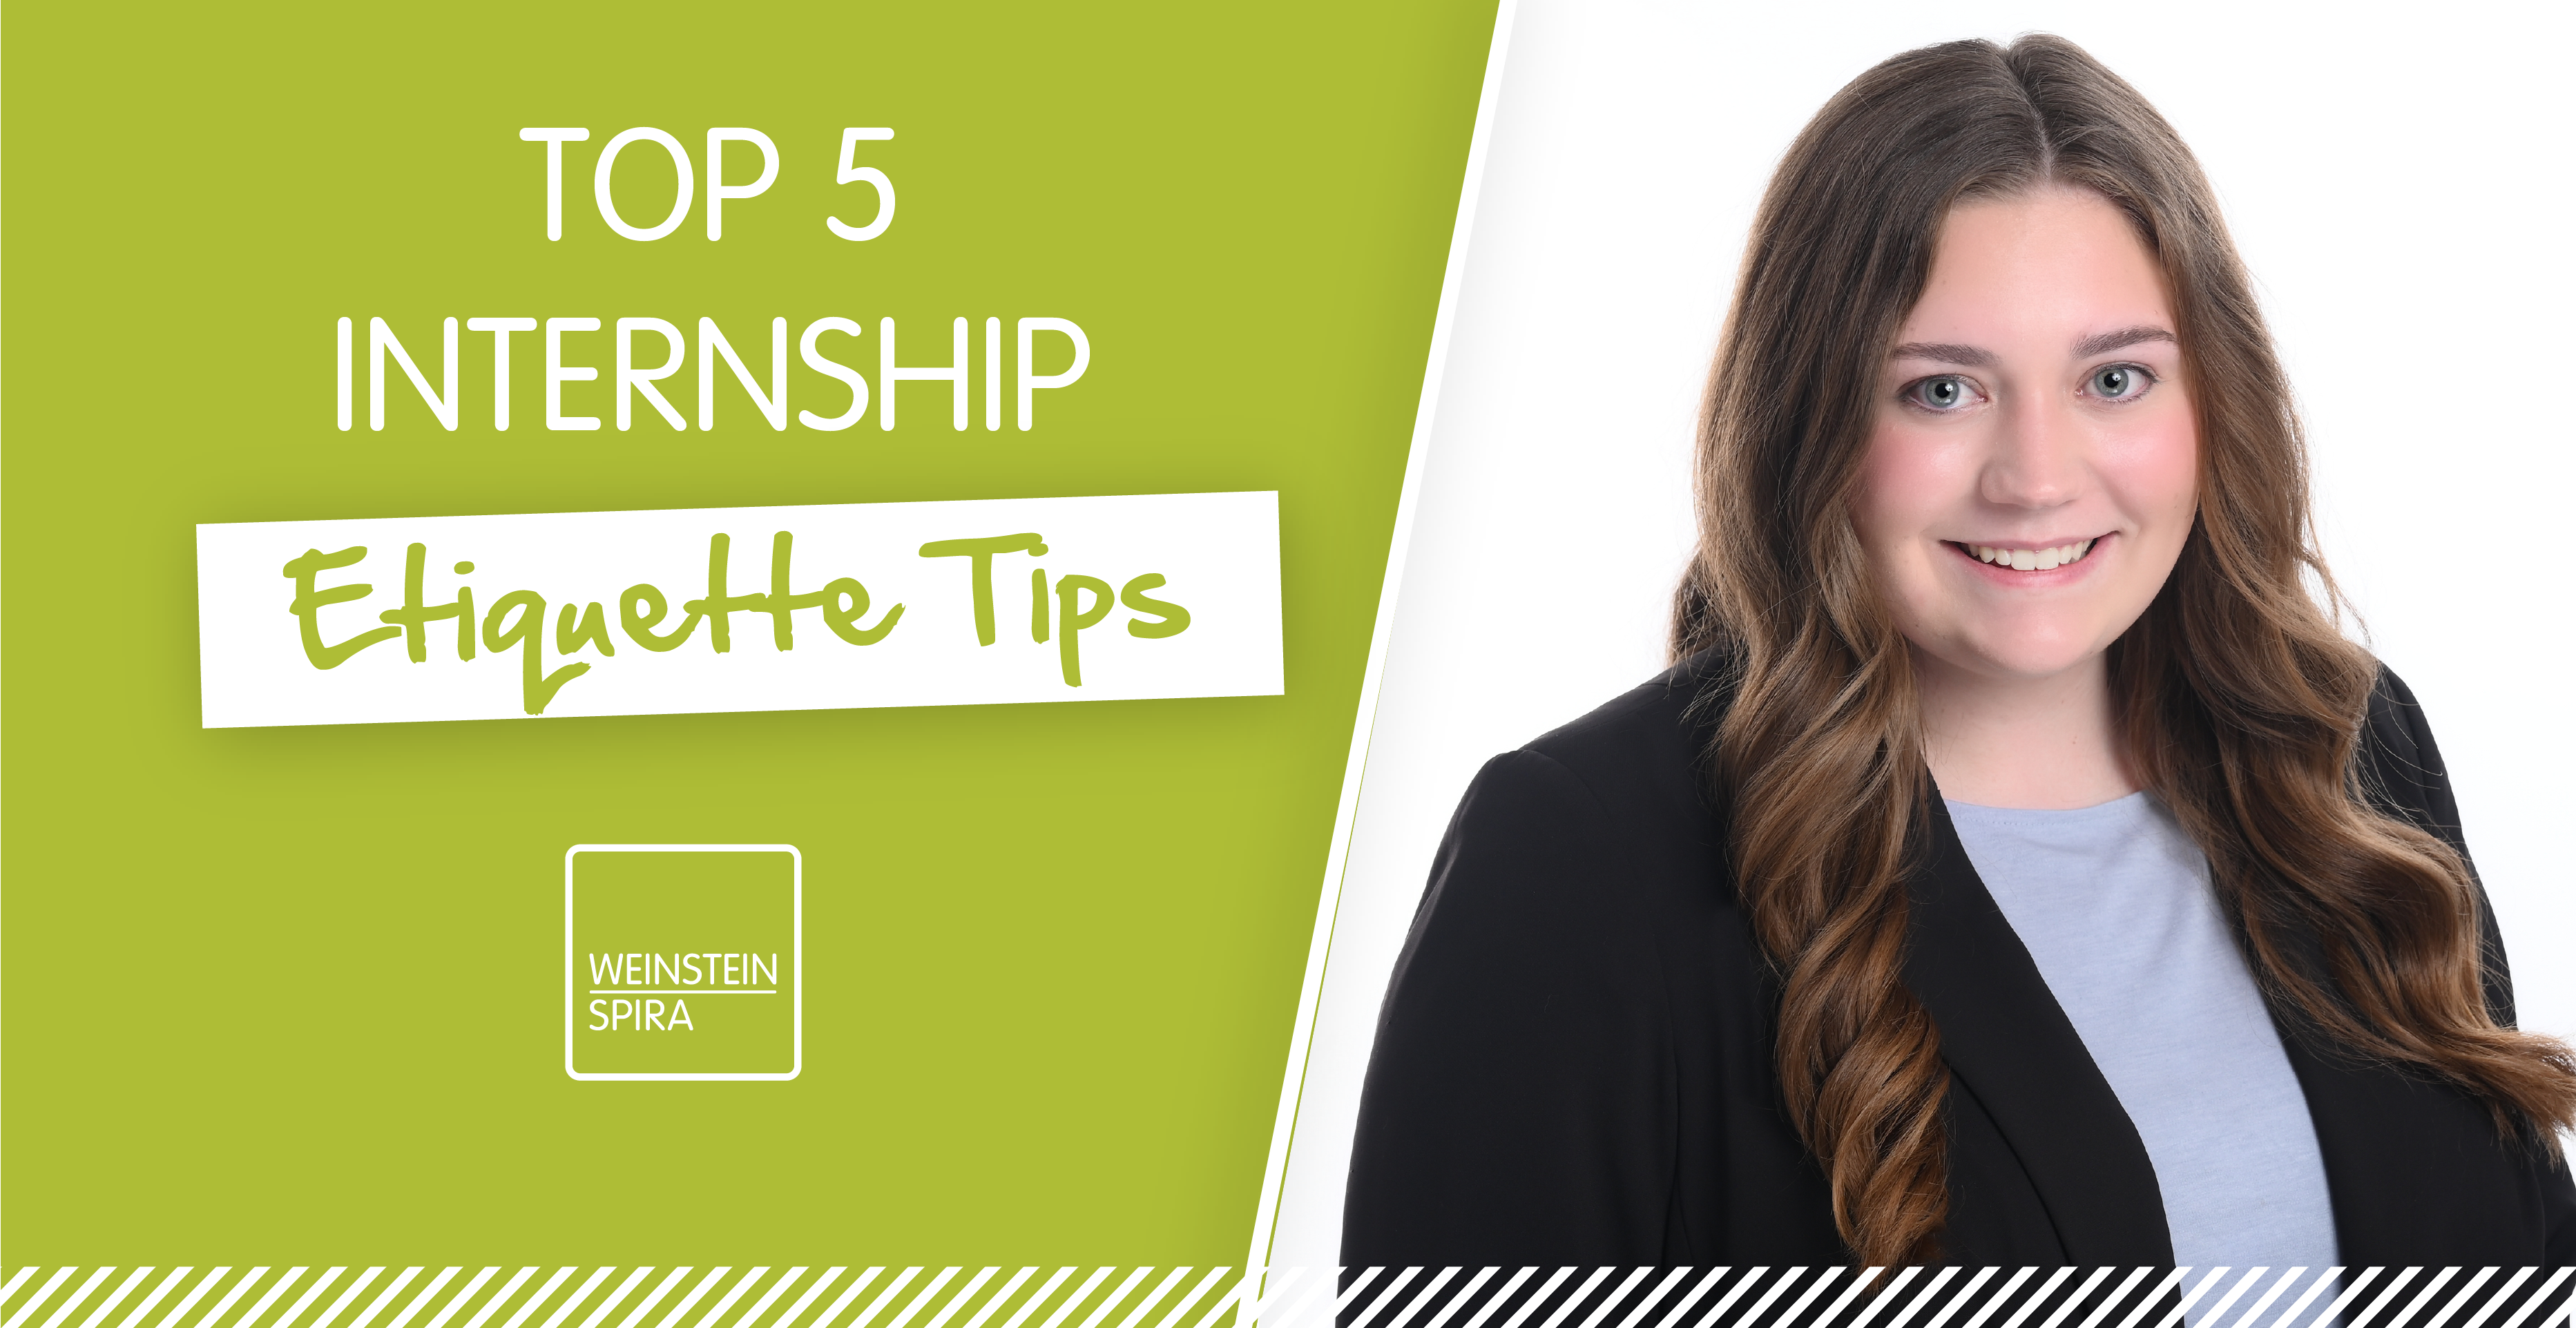 Top 5 Internship Etiquette Tips